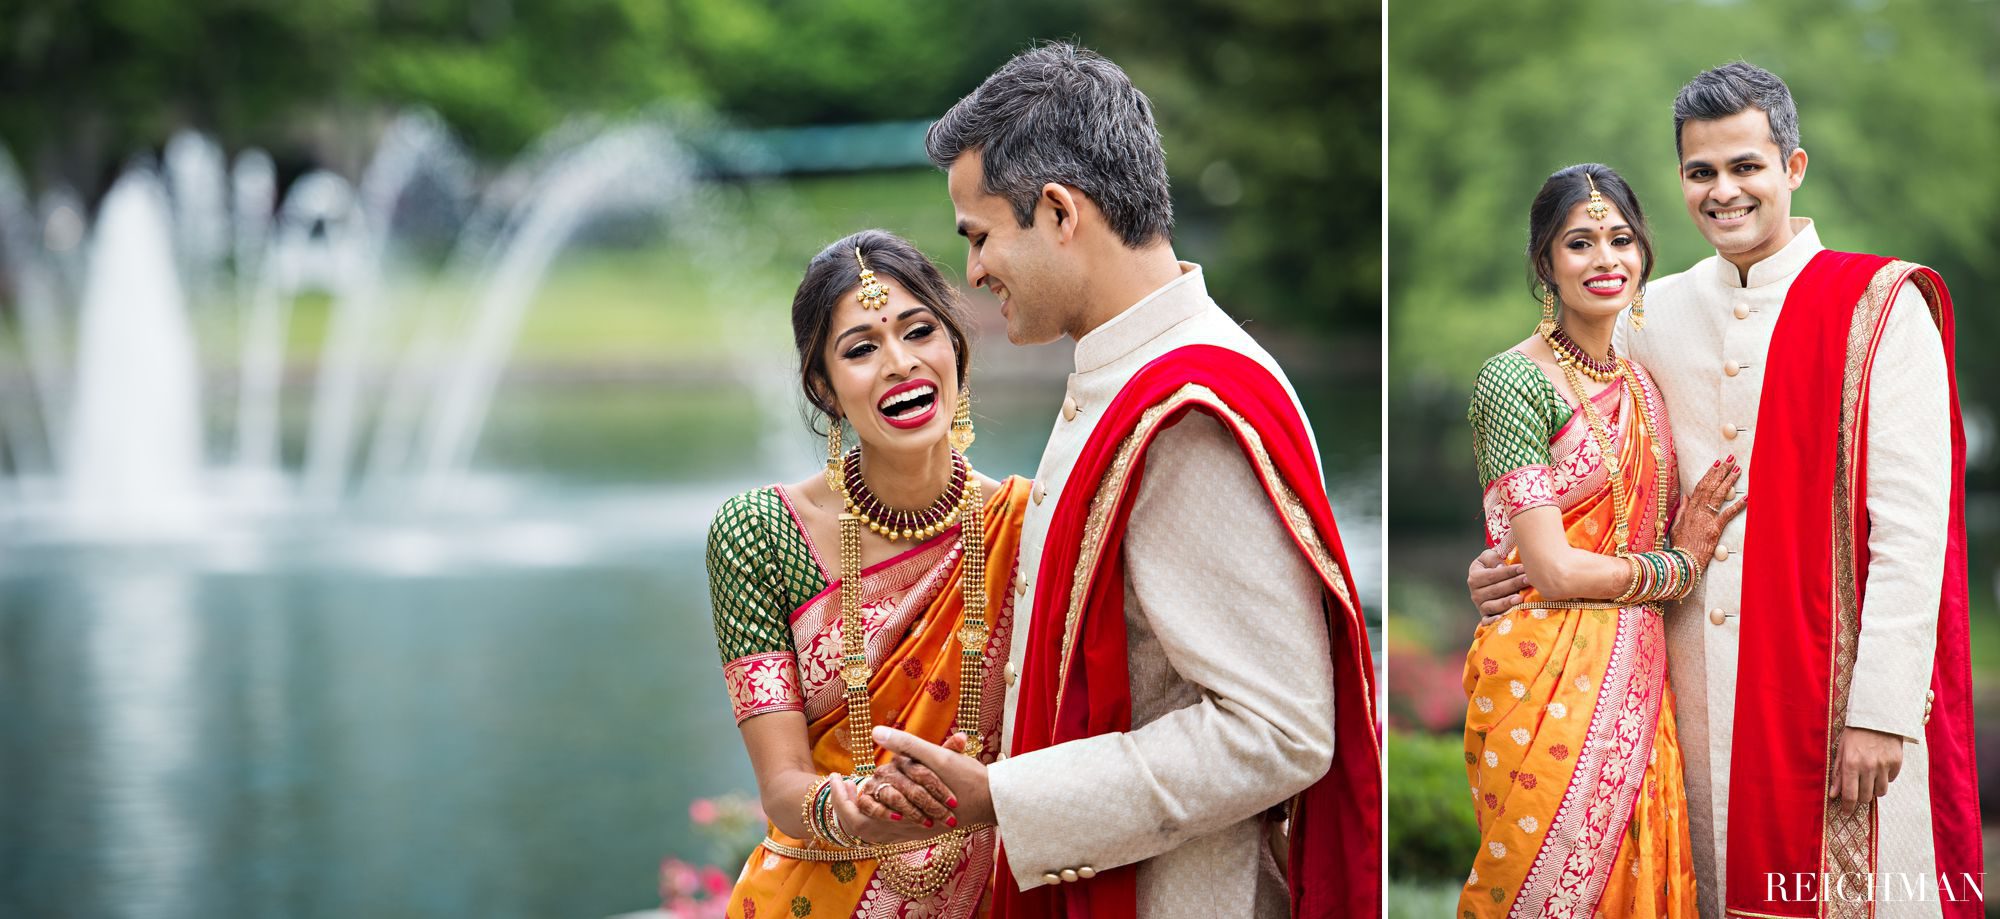 Atlanta Indian wedding photography